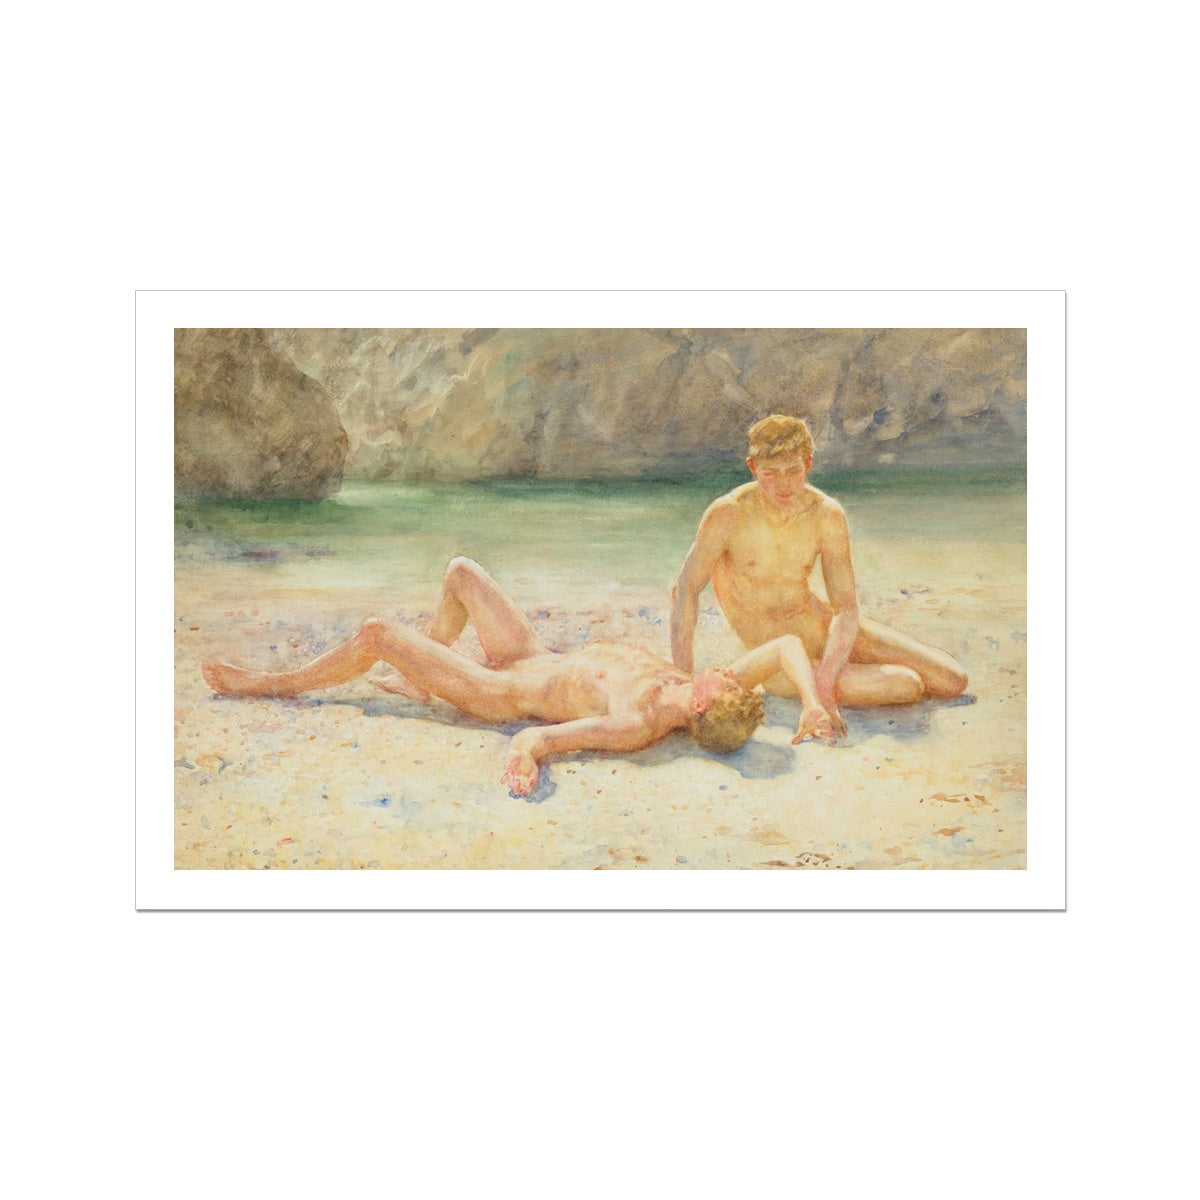 Henry Scott Tuke Open Edition Art Print. Bathing Group, Noonday Heat, Falmouth, Cornwall. Art Gallery Historic Art